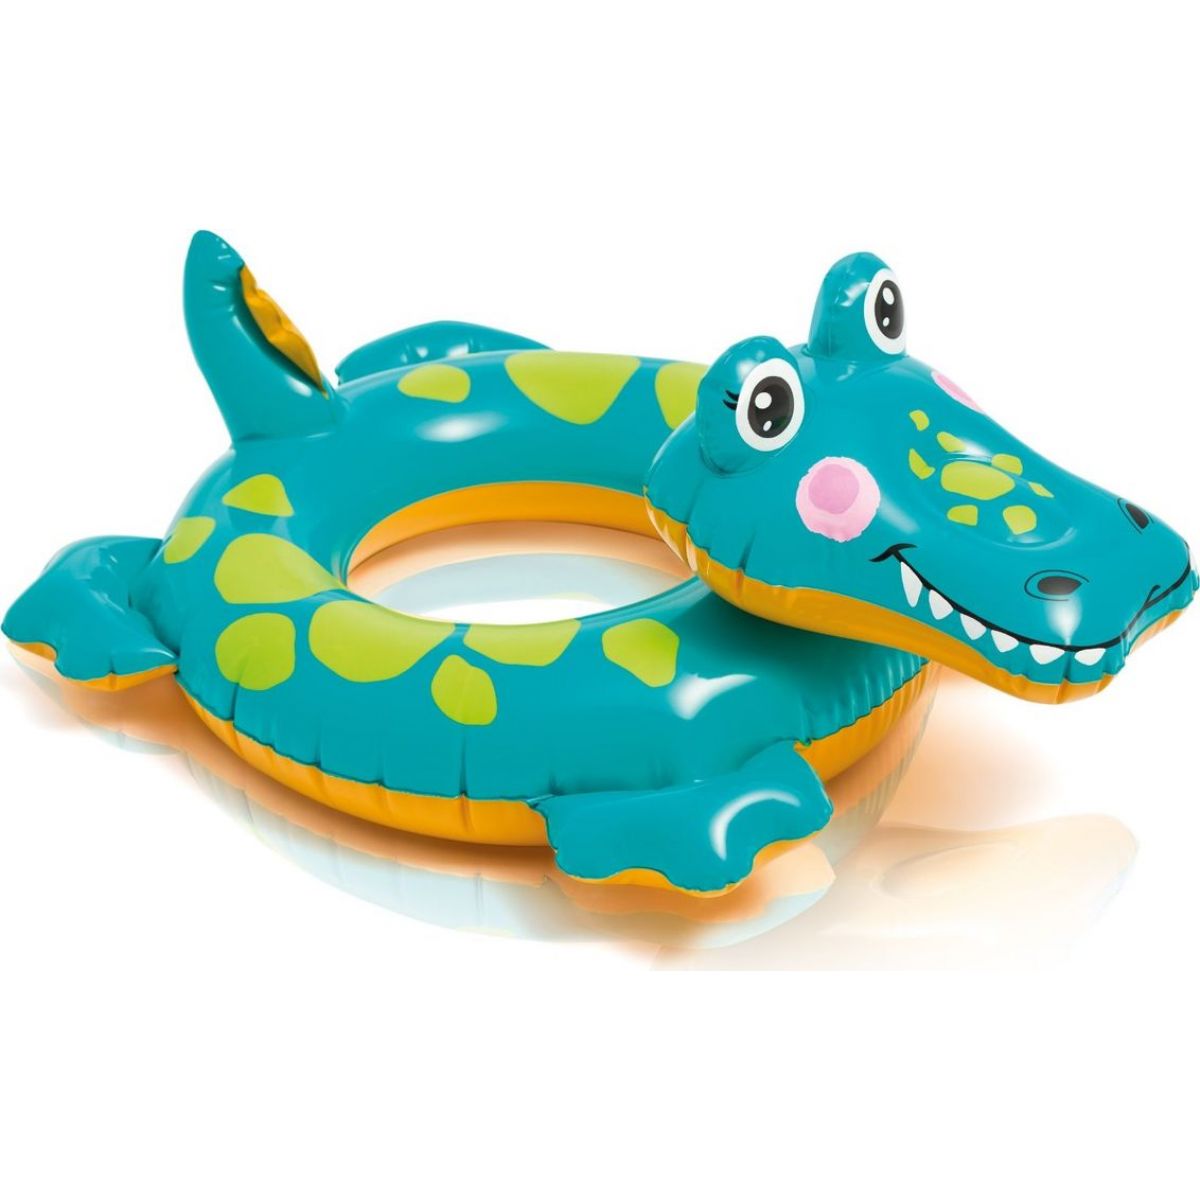 Plavací kruh Zvířátka Intex 58221 - Krokodýl